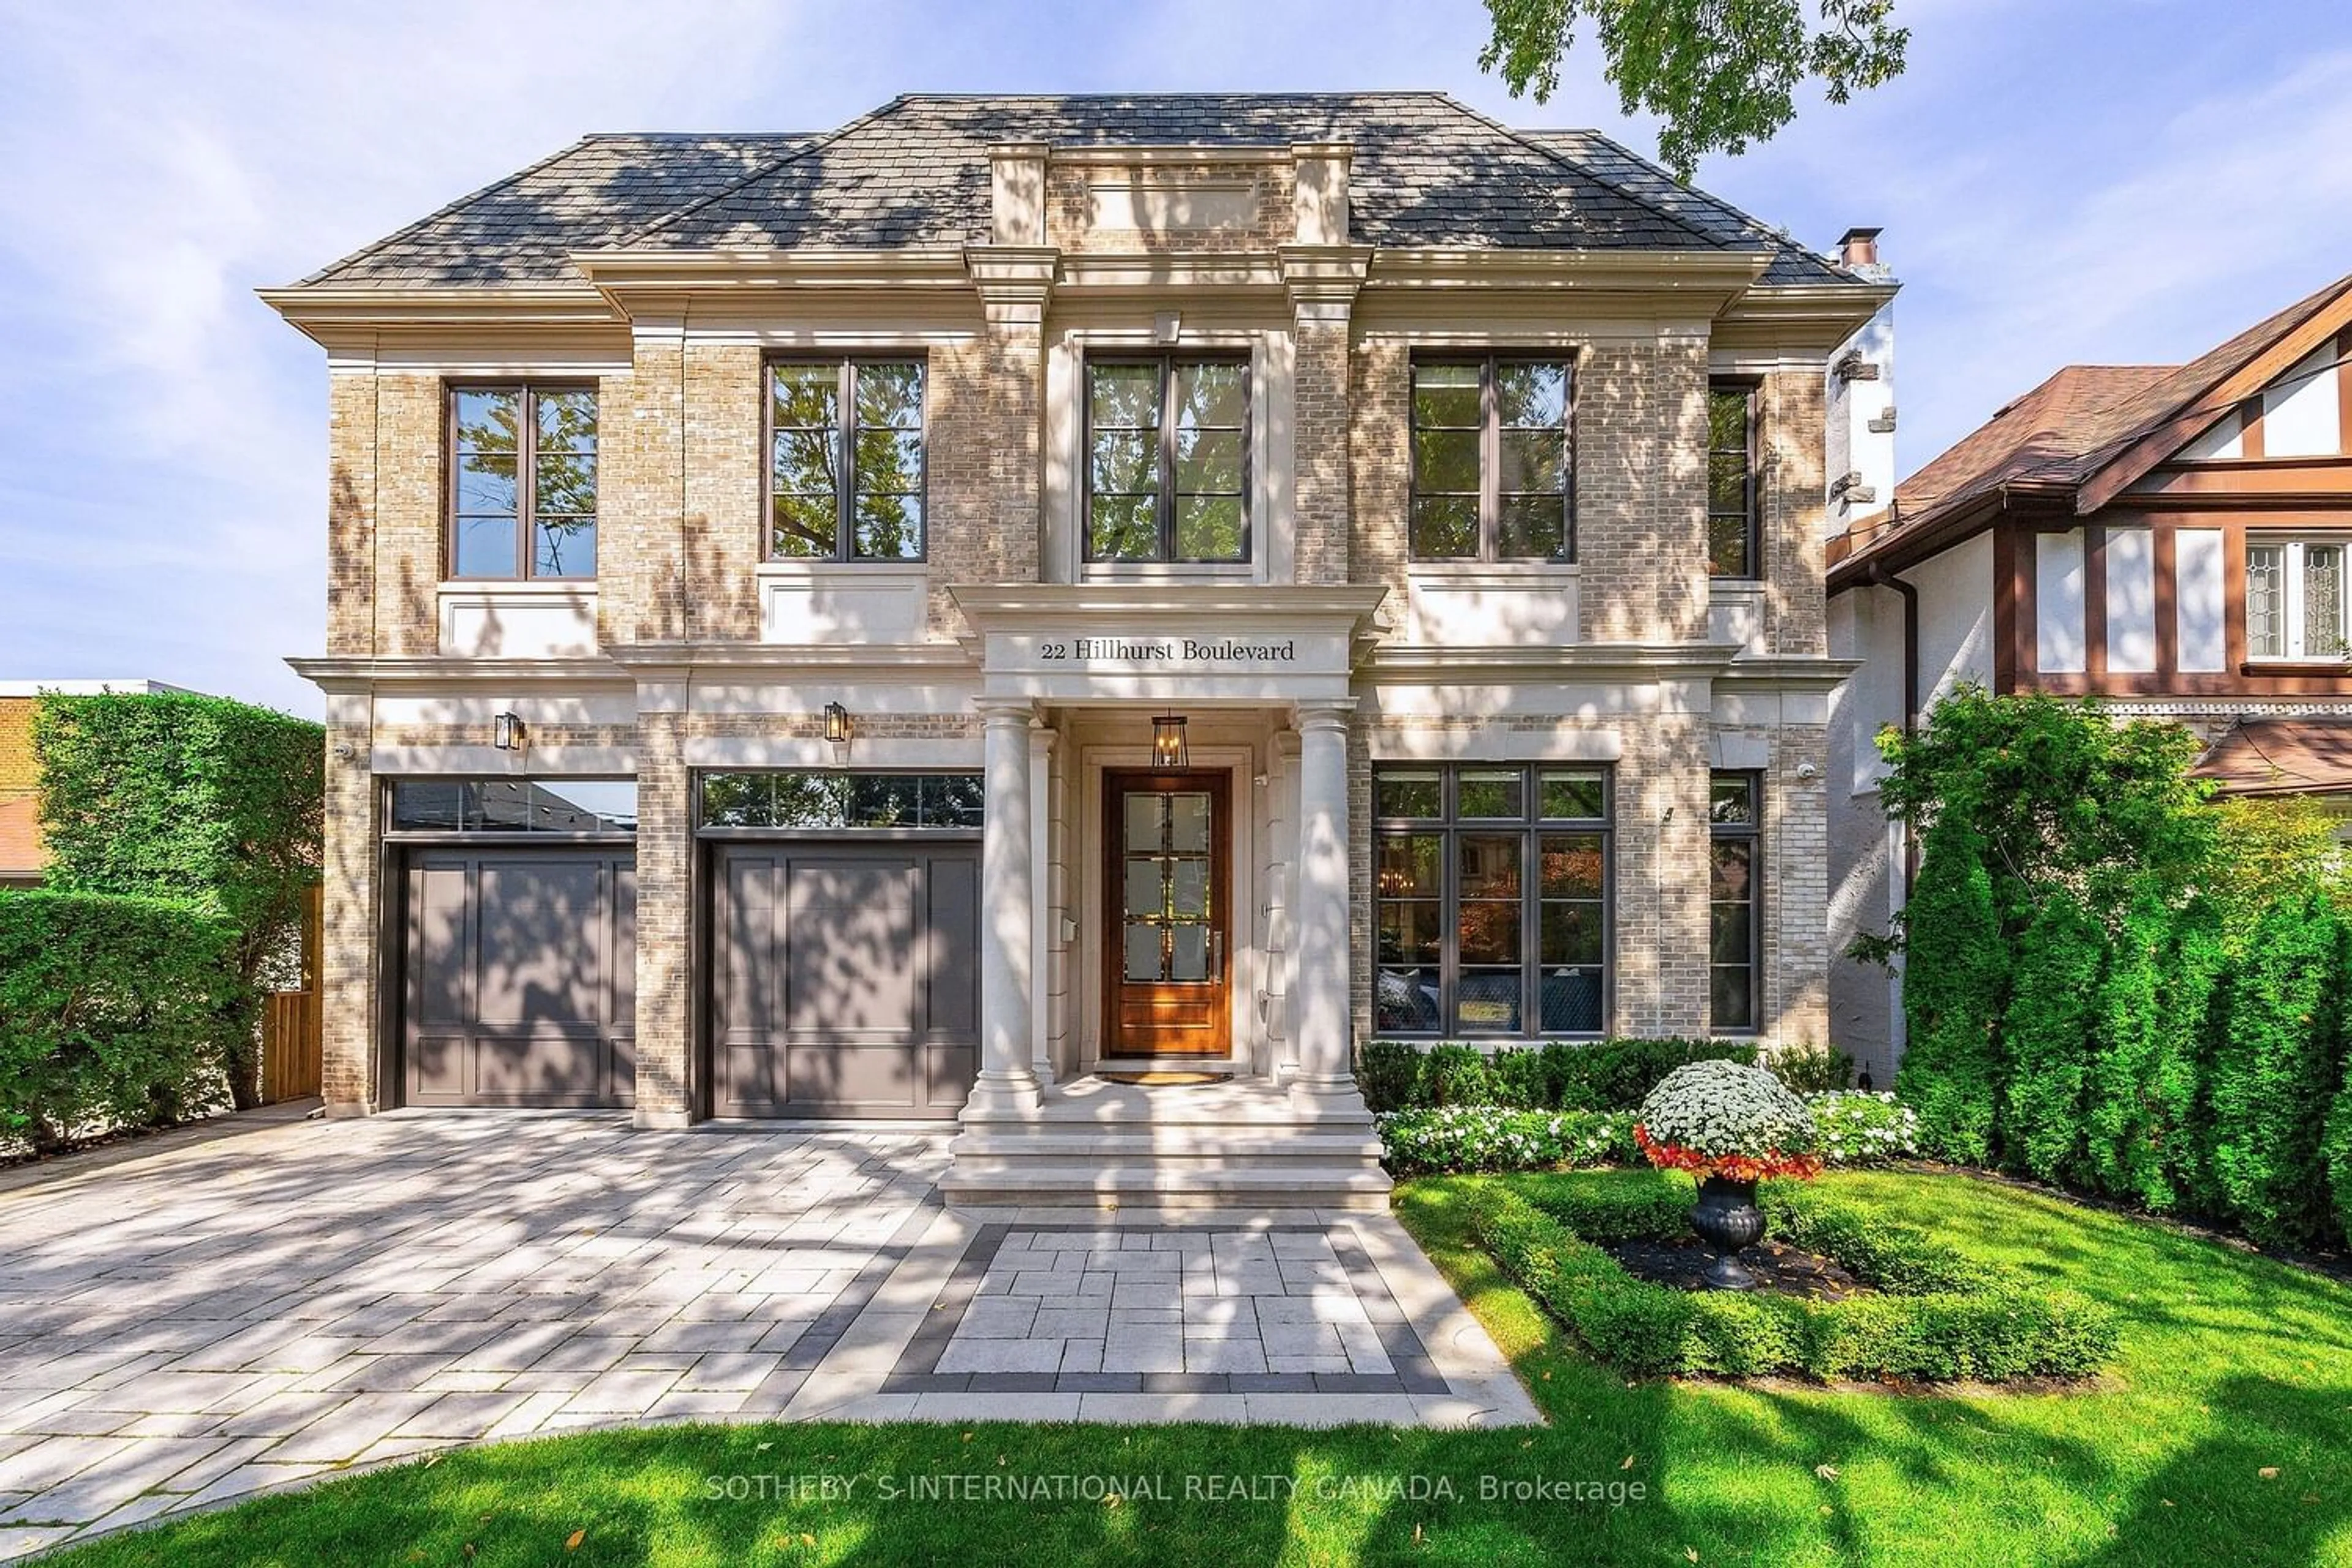 Home with brick exterior material for 22 Hillhurst Blvd, Toronto Ontario M4R 1K4